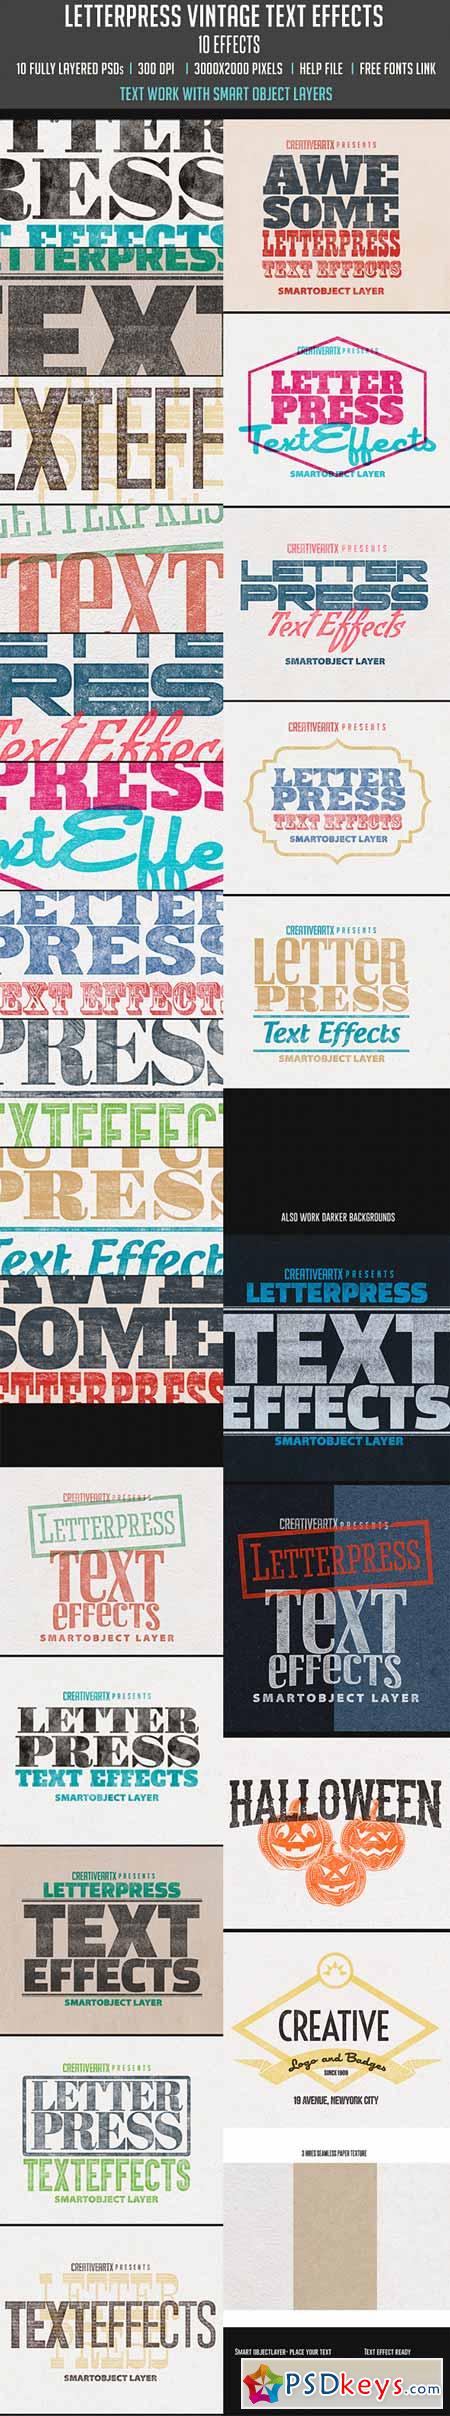 Letterpress Vintage Text Effects 9749142